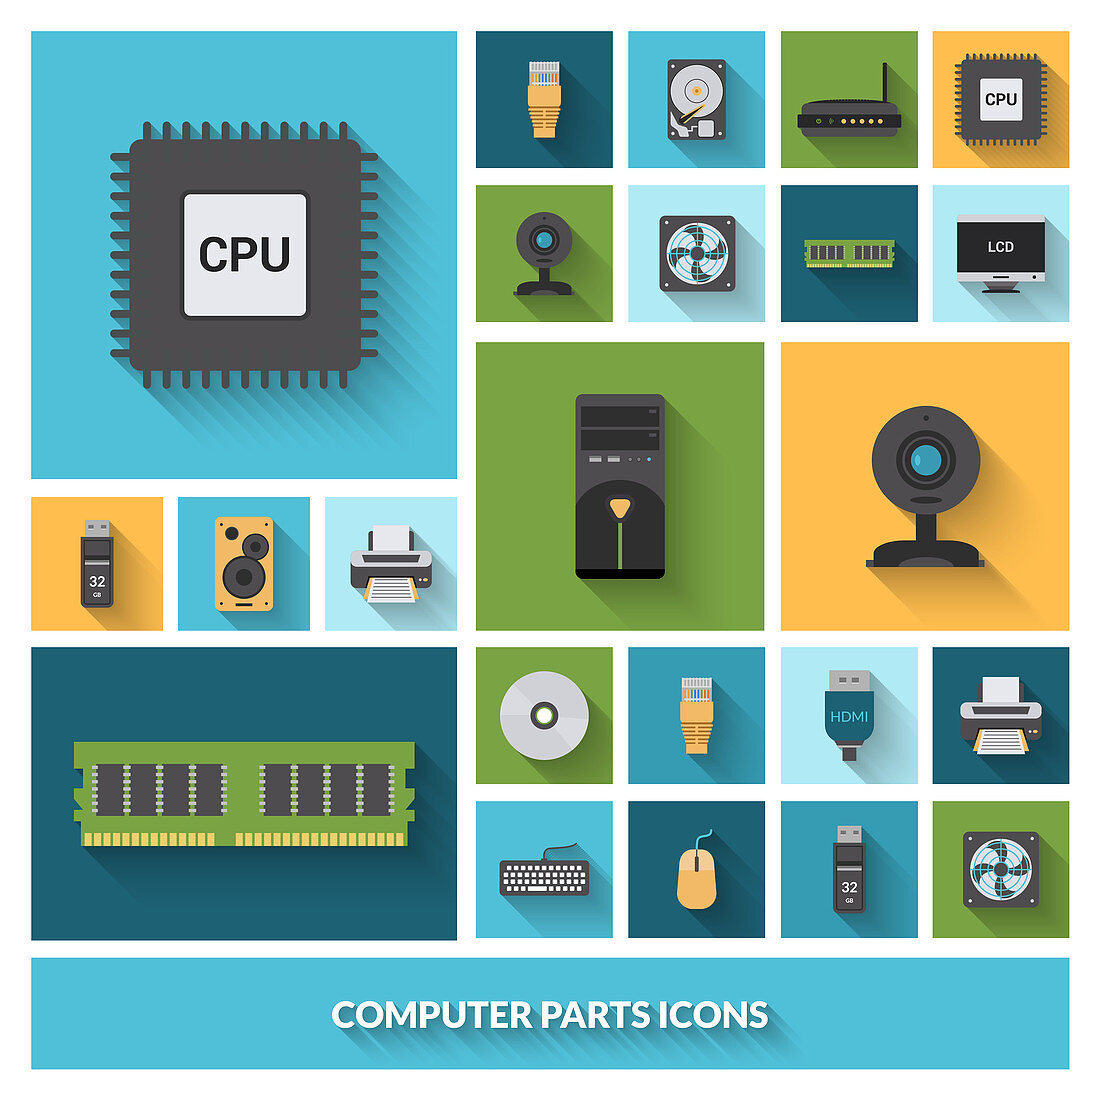 Computer parts icons, illustration